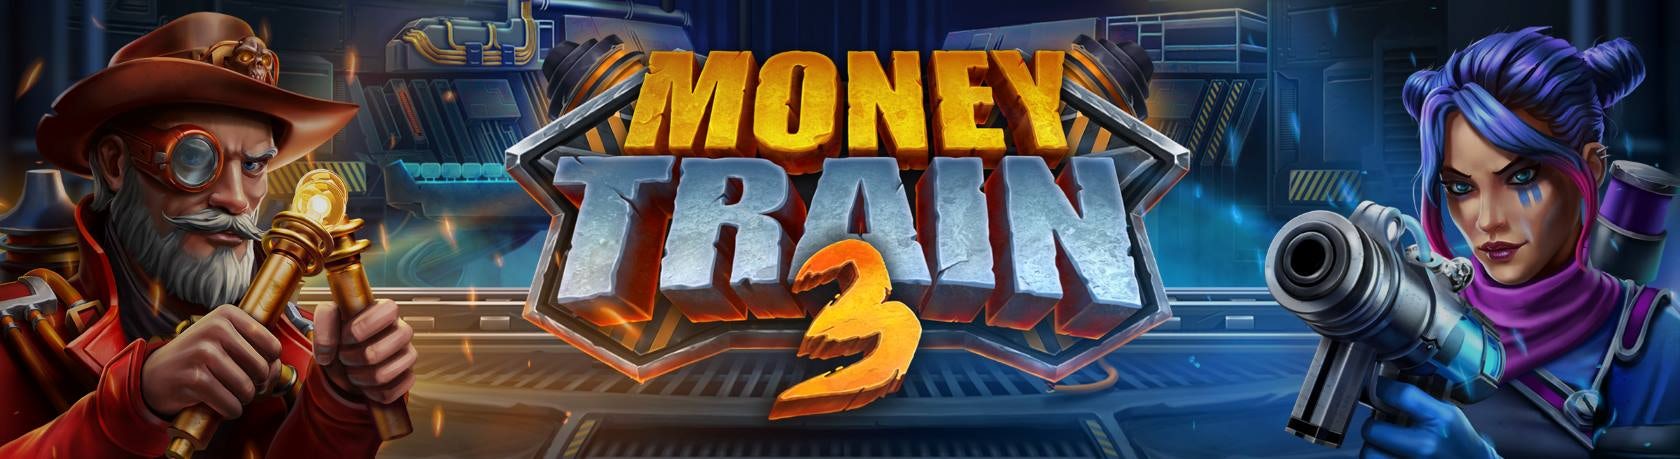 Money-Train-3-1680x600 (1)